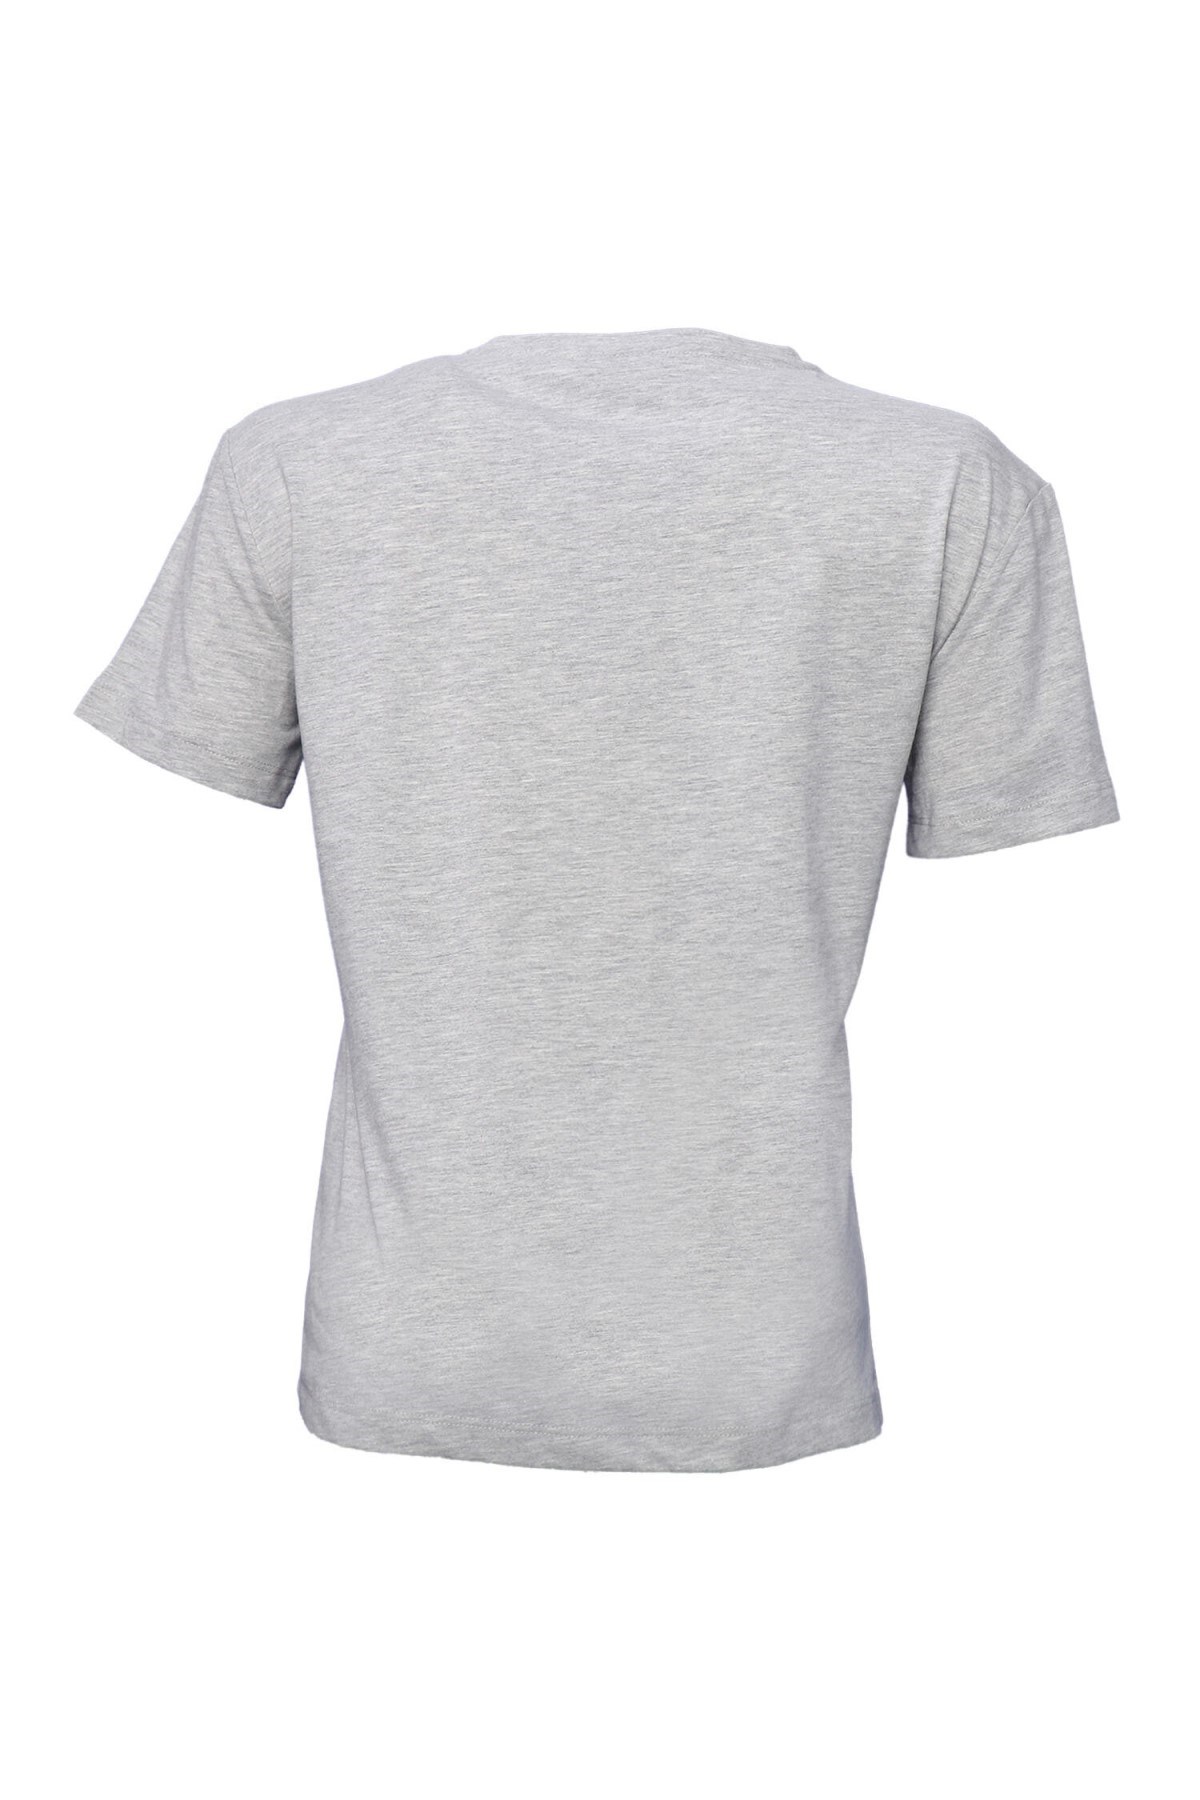 Hummel Kadın T-Shirt 911549-2010 Lıght Grey Melange